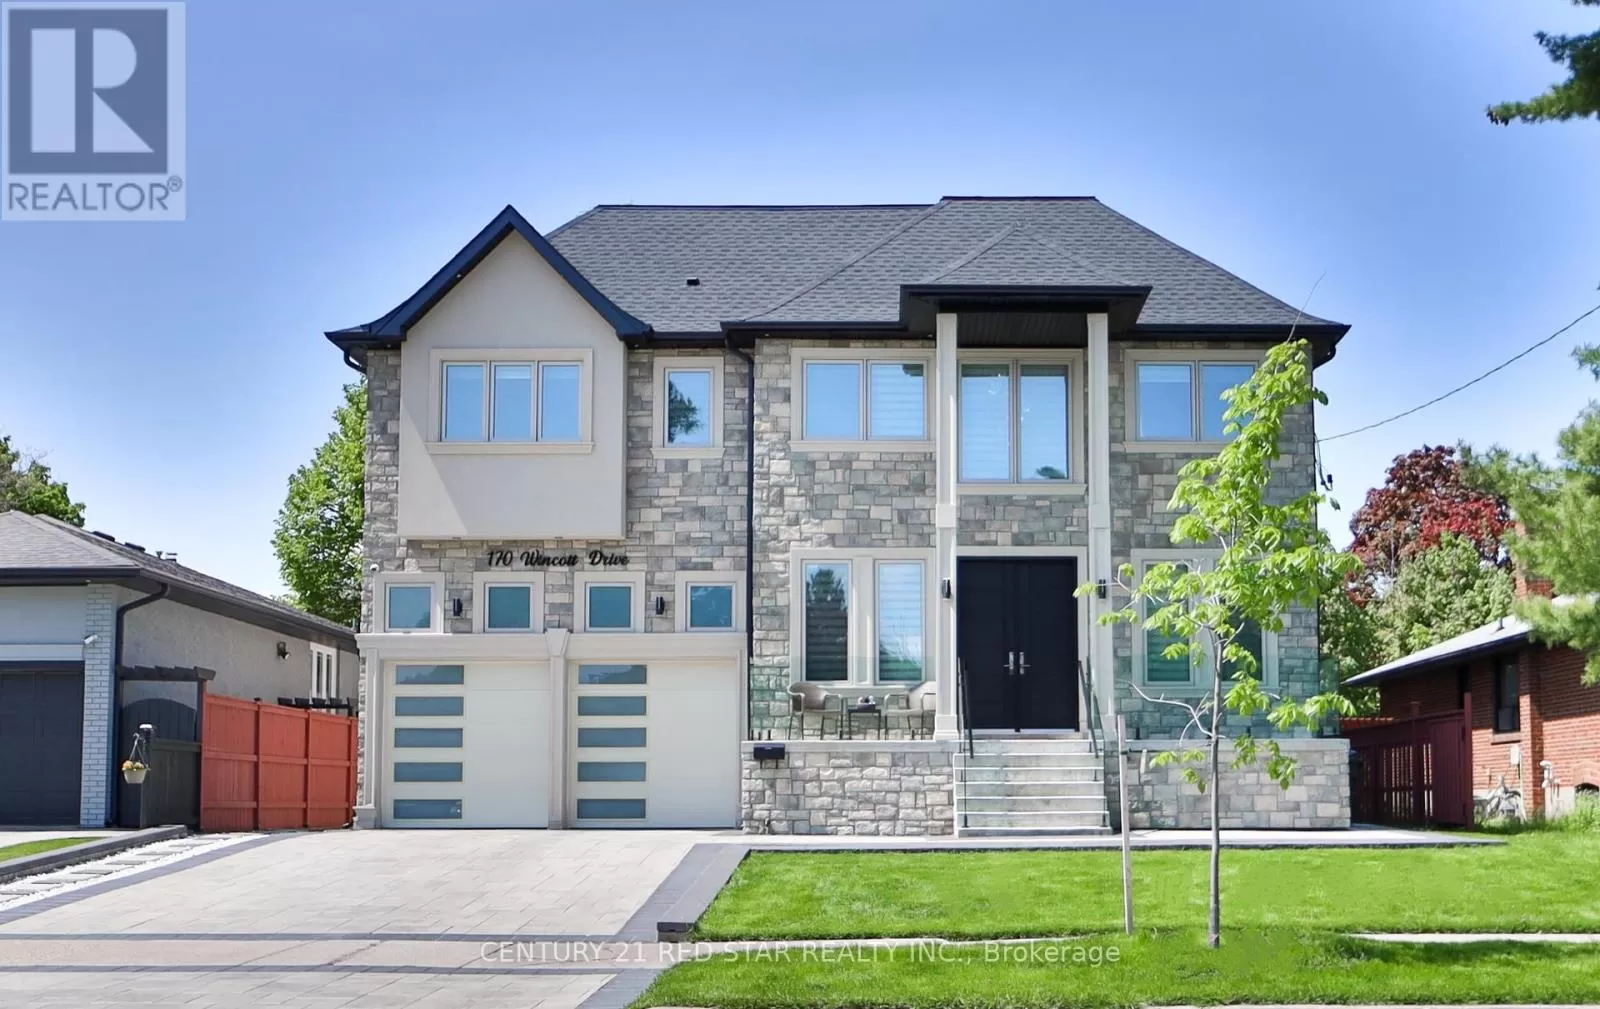 House for rent: 170 Wincott Drive W, Toronto, Ontario M9R 2P8